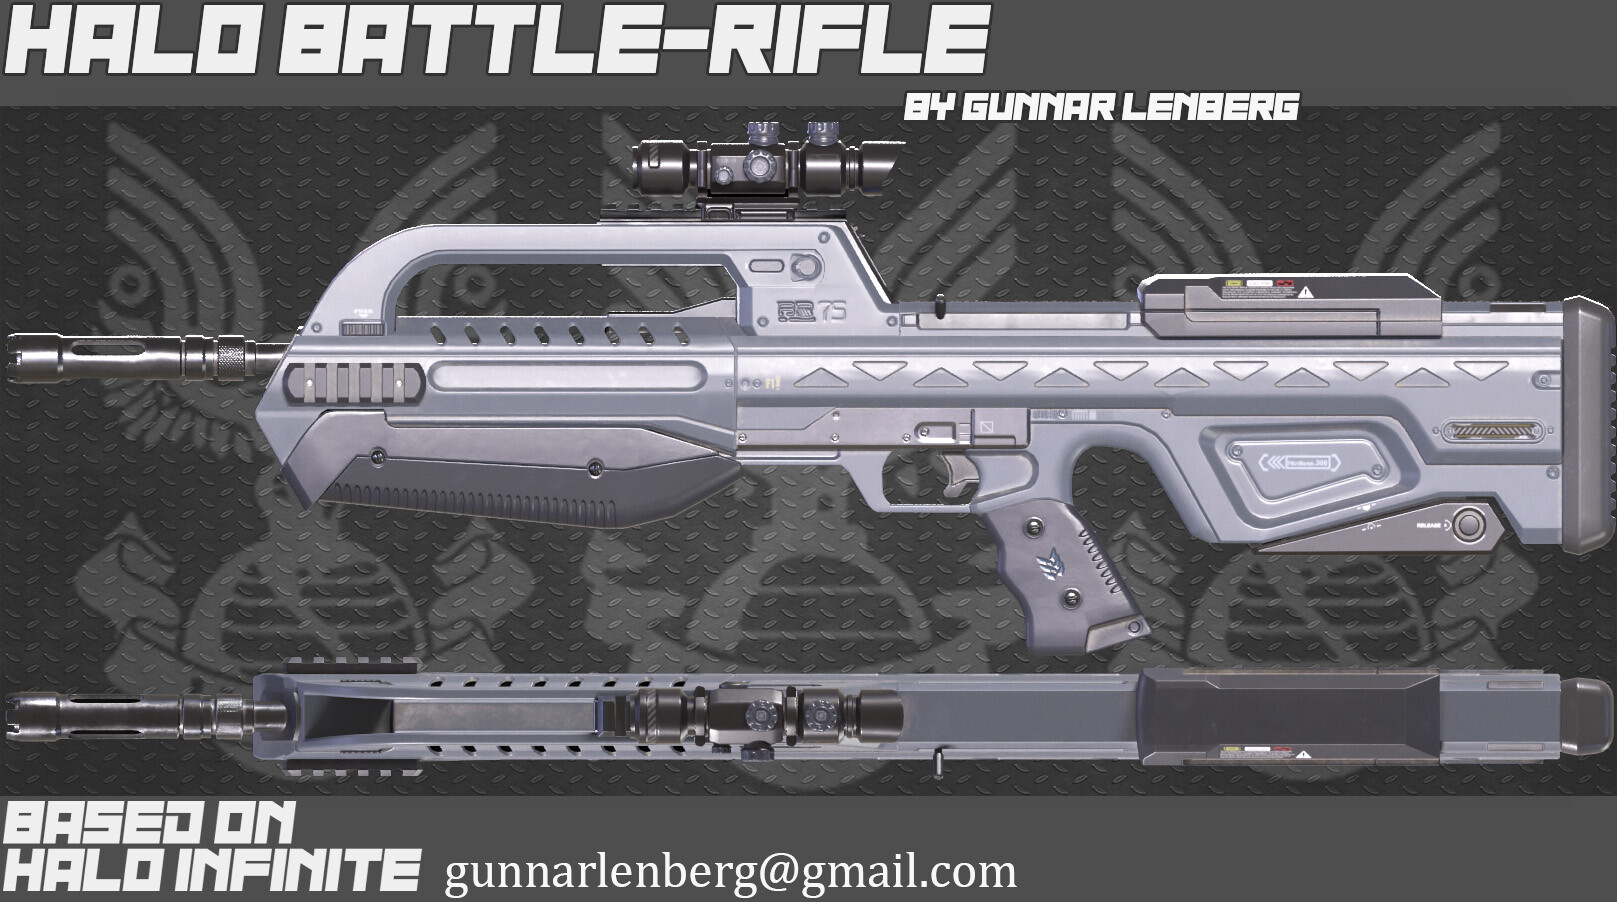 BR75 battle rifle - Weapon - Halopedia, the Halo wiki